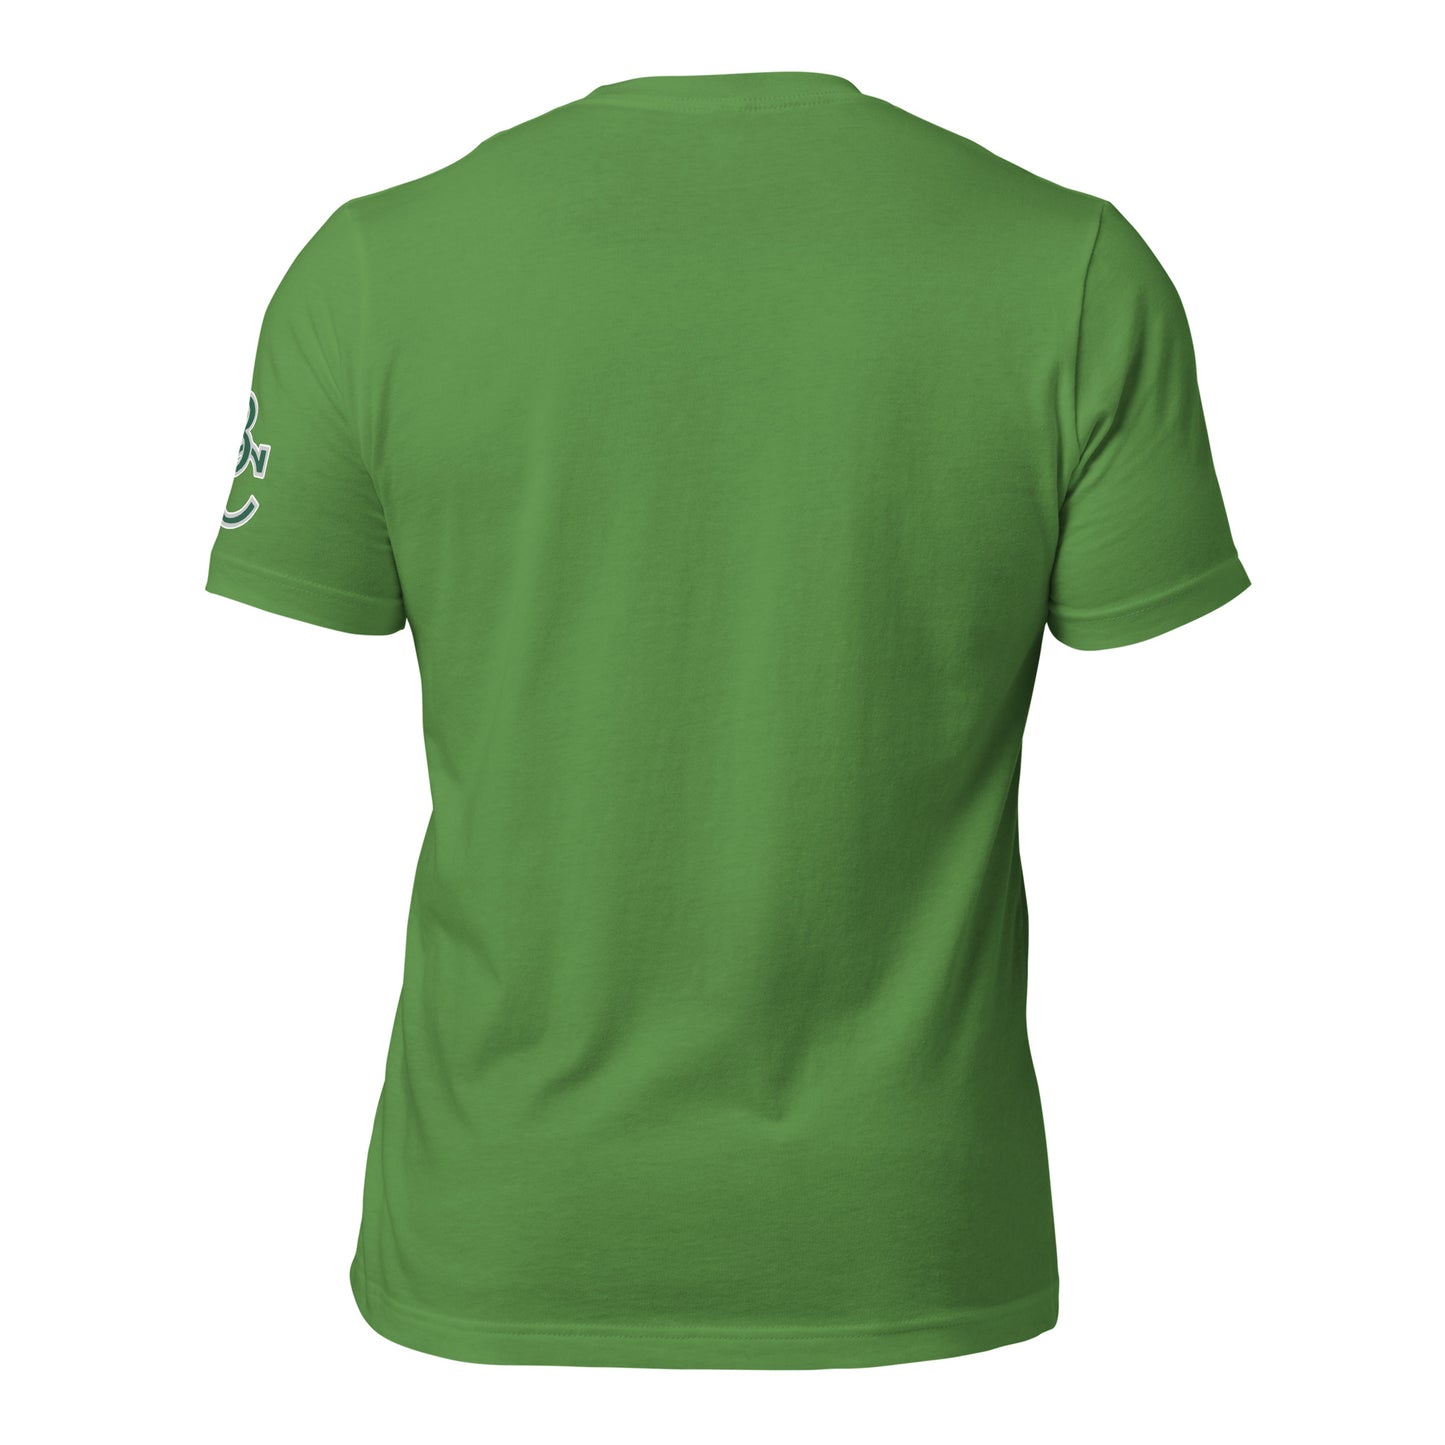 CENTRAL RAMS - VINTAGE RAM LOGO / BC ON SLEEVE - BELLA+CANVAS - Unisex t-shirt